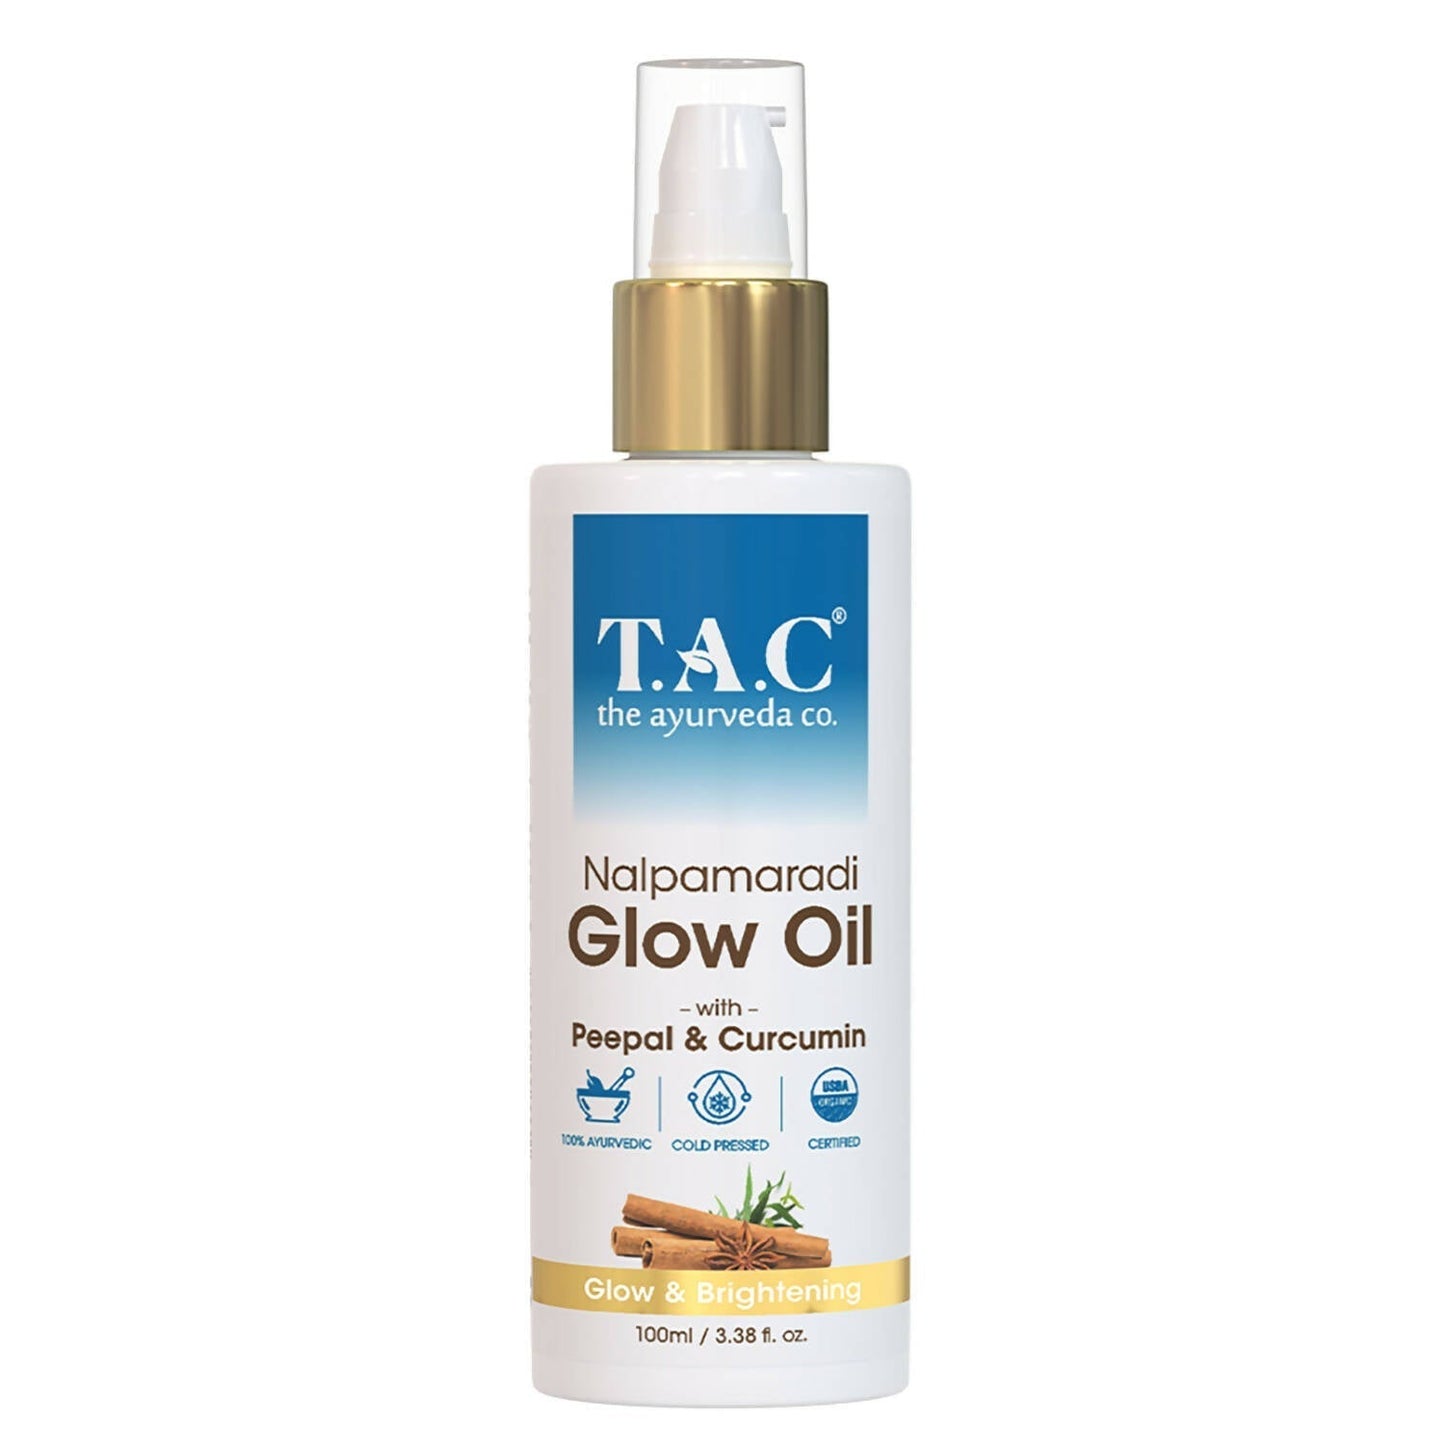 TAC - The Ayurveda Co. Nalpamaradi Glow Oil for Brightening and Glowing Skin with Peepal & Curcumin, for Women & Men - BUDNE